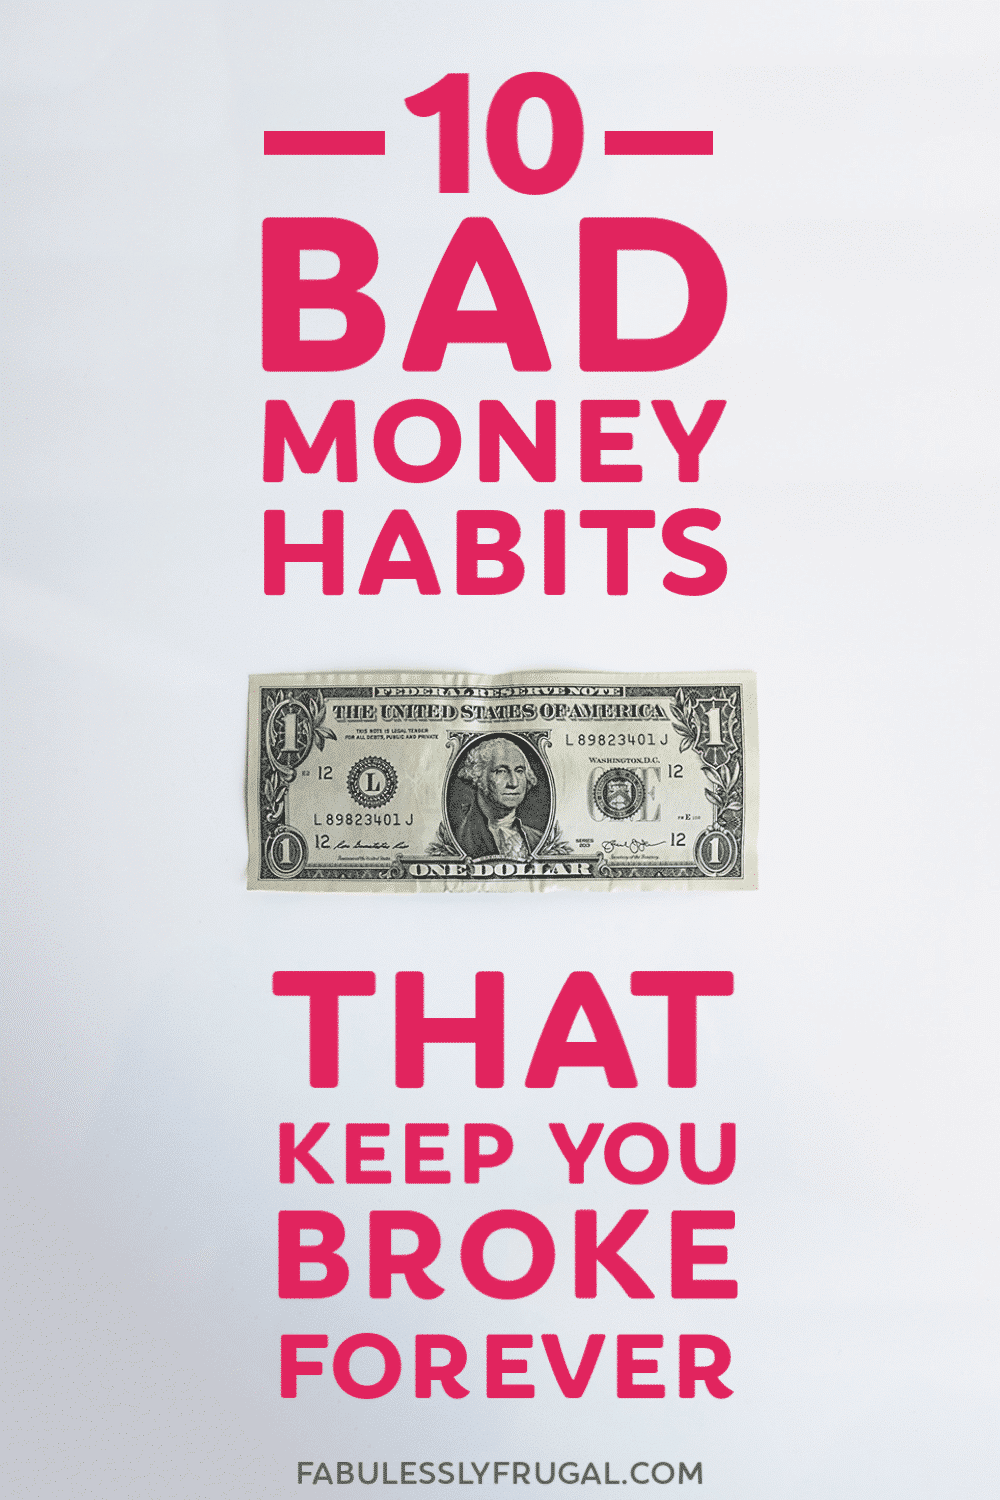 Bad financial habits